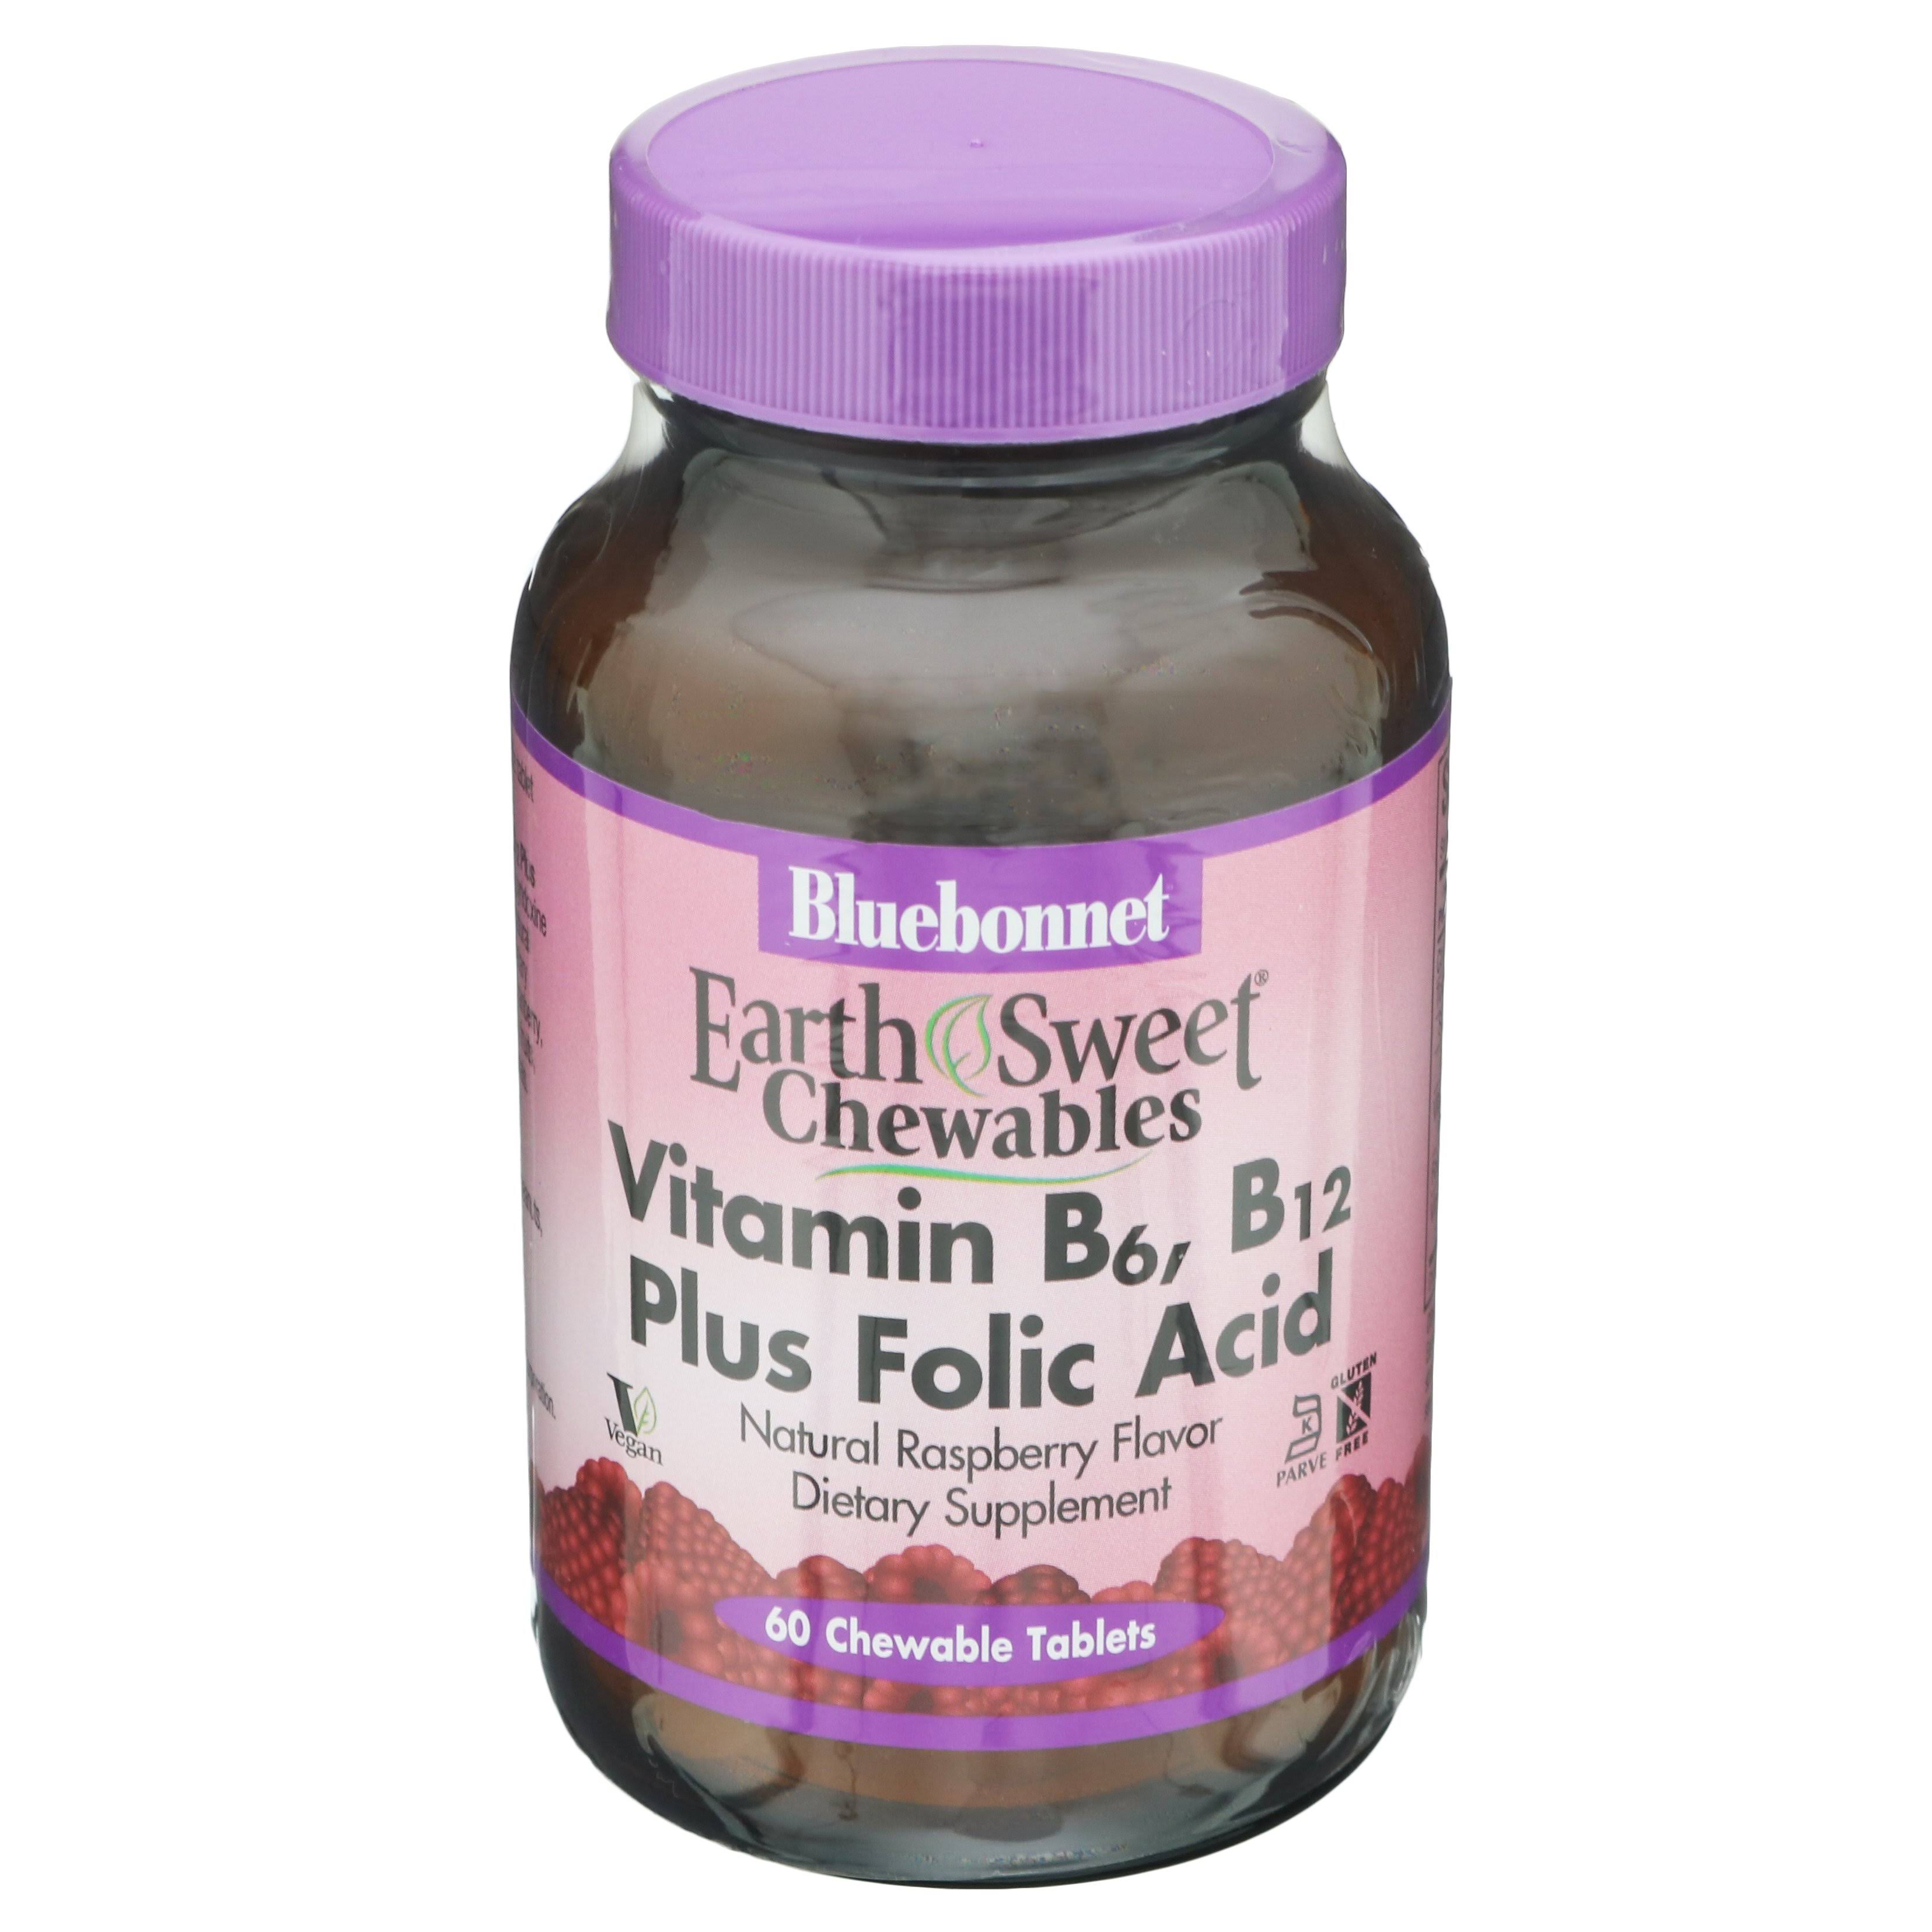 Bluebonnet Earth Sweet Multi Vitamins Dietary Supplement - 60 Chewable Tablets